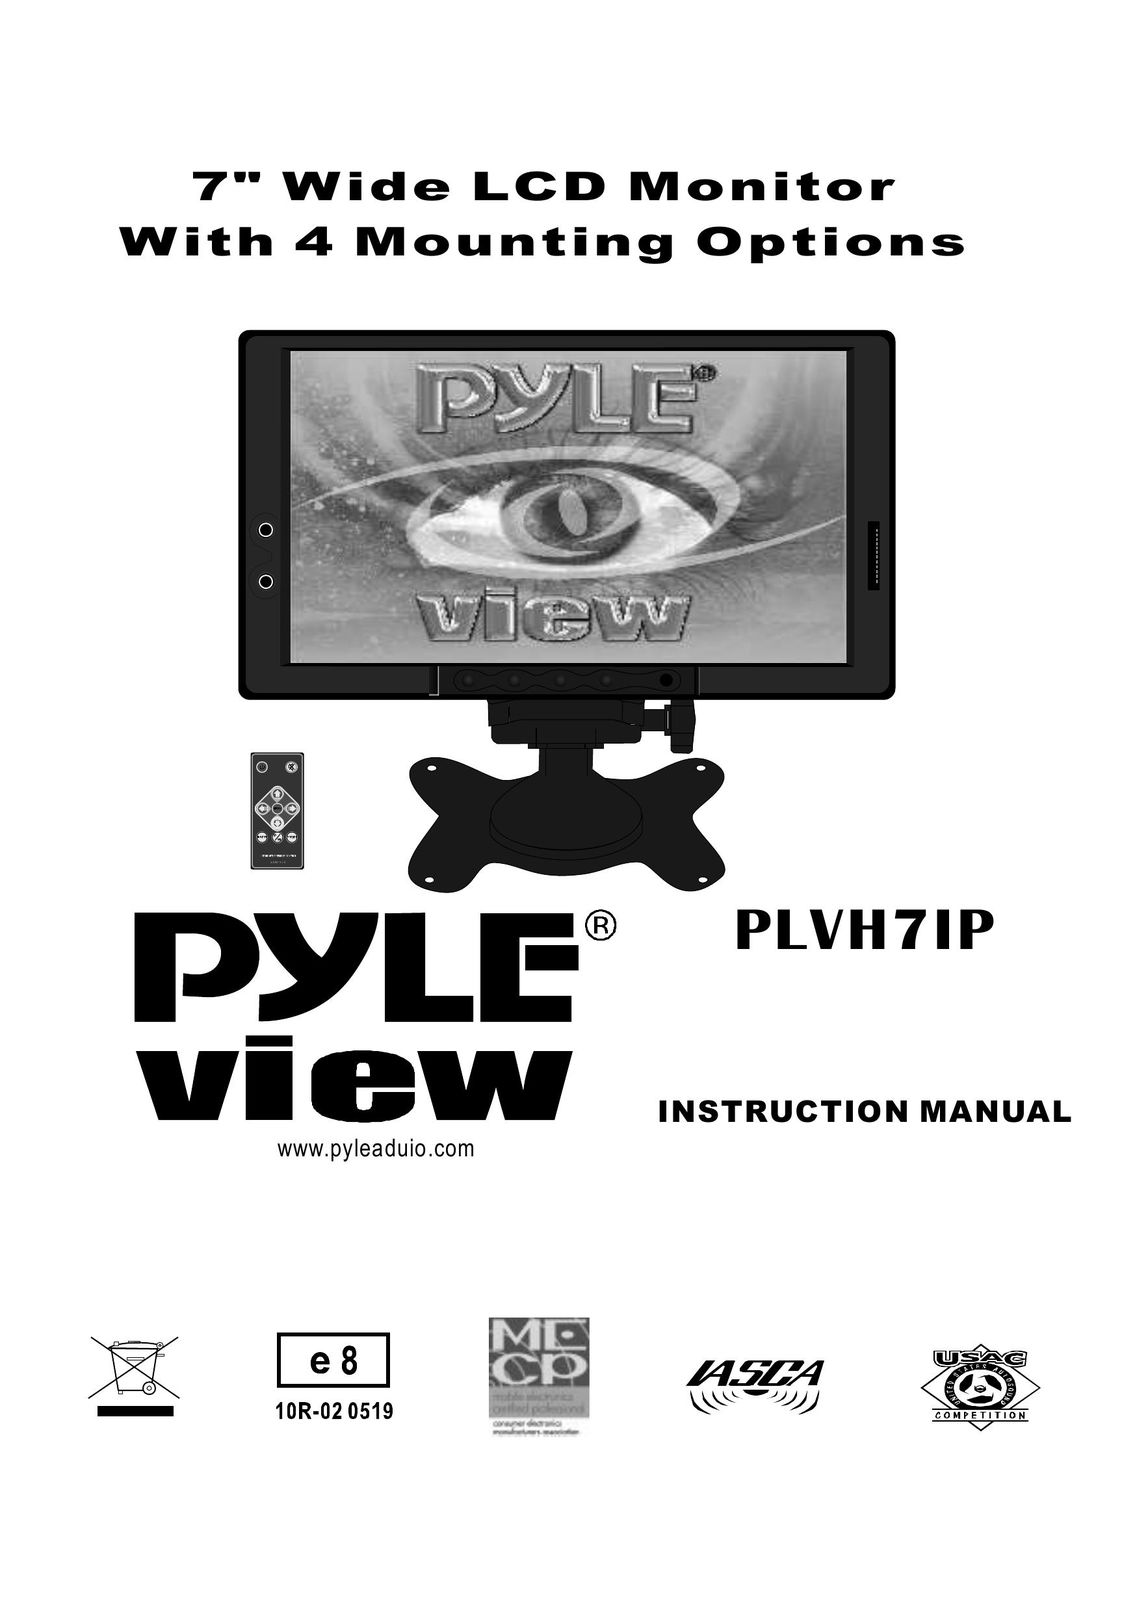 Radio Shack PLVH7IP Car Video System User Manual